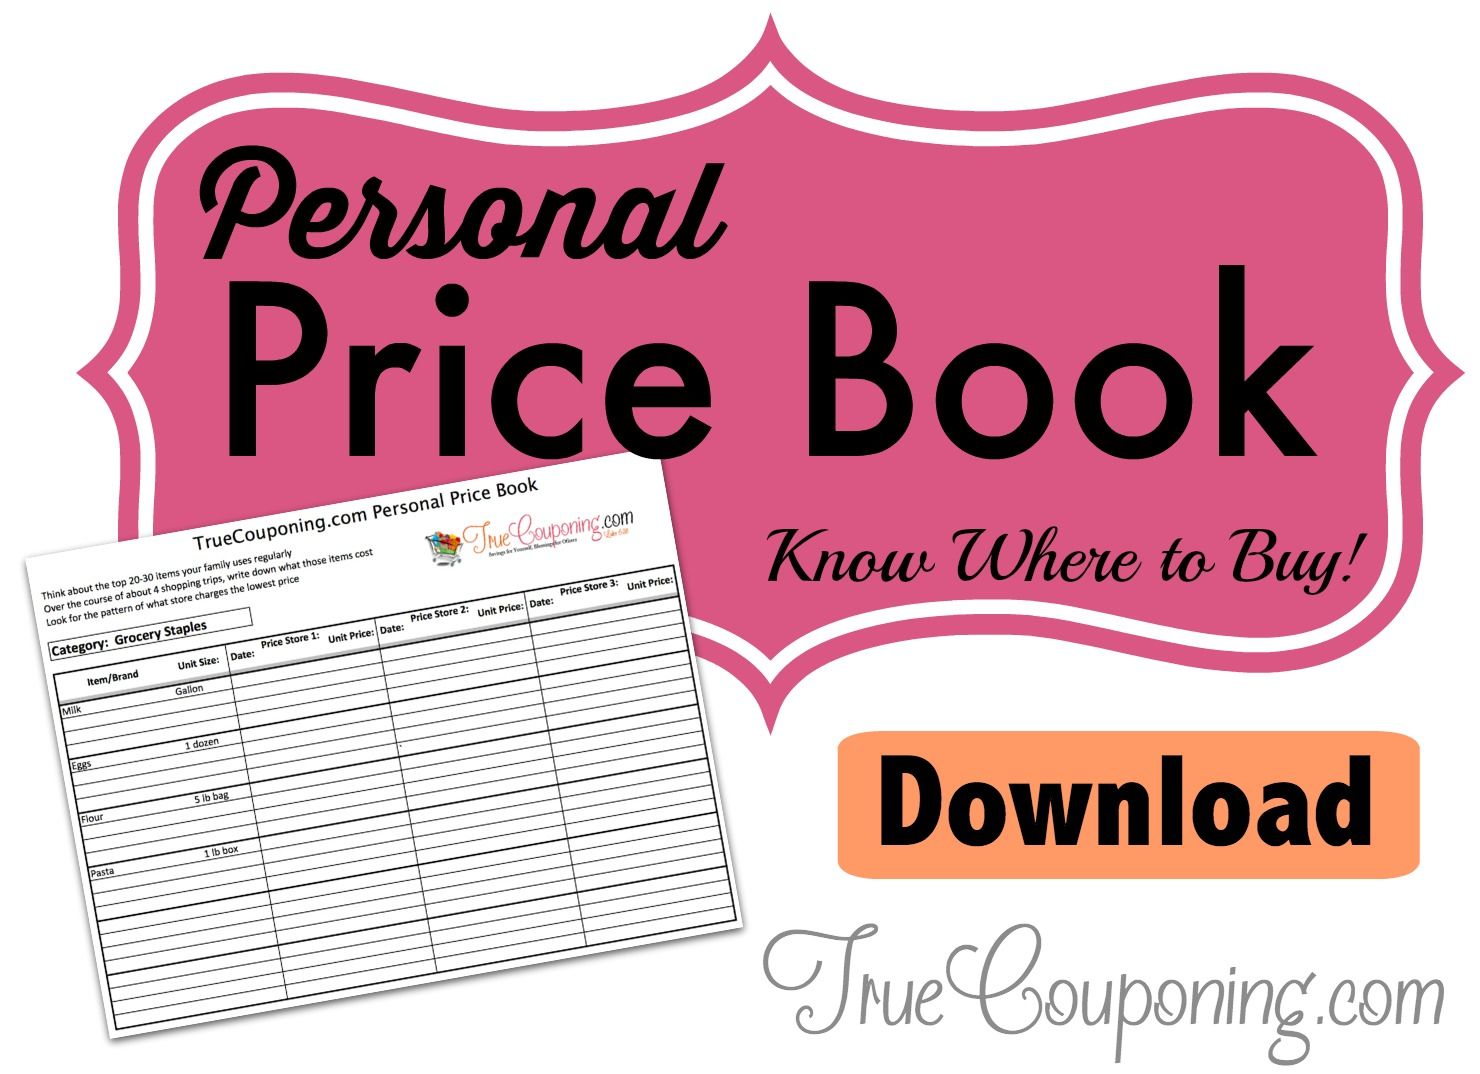 Personal Price Book Main Image